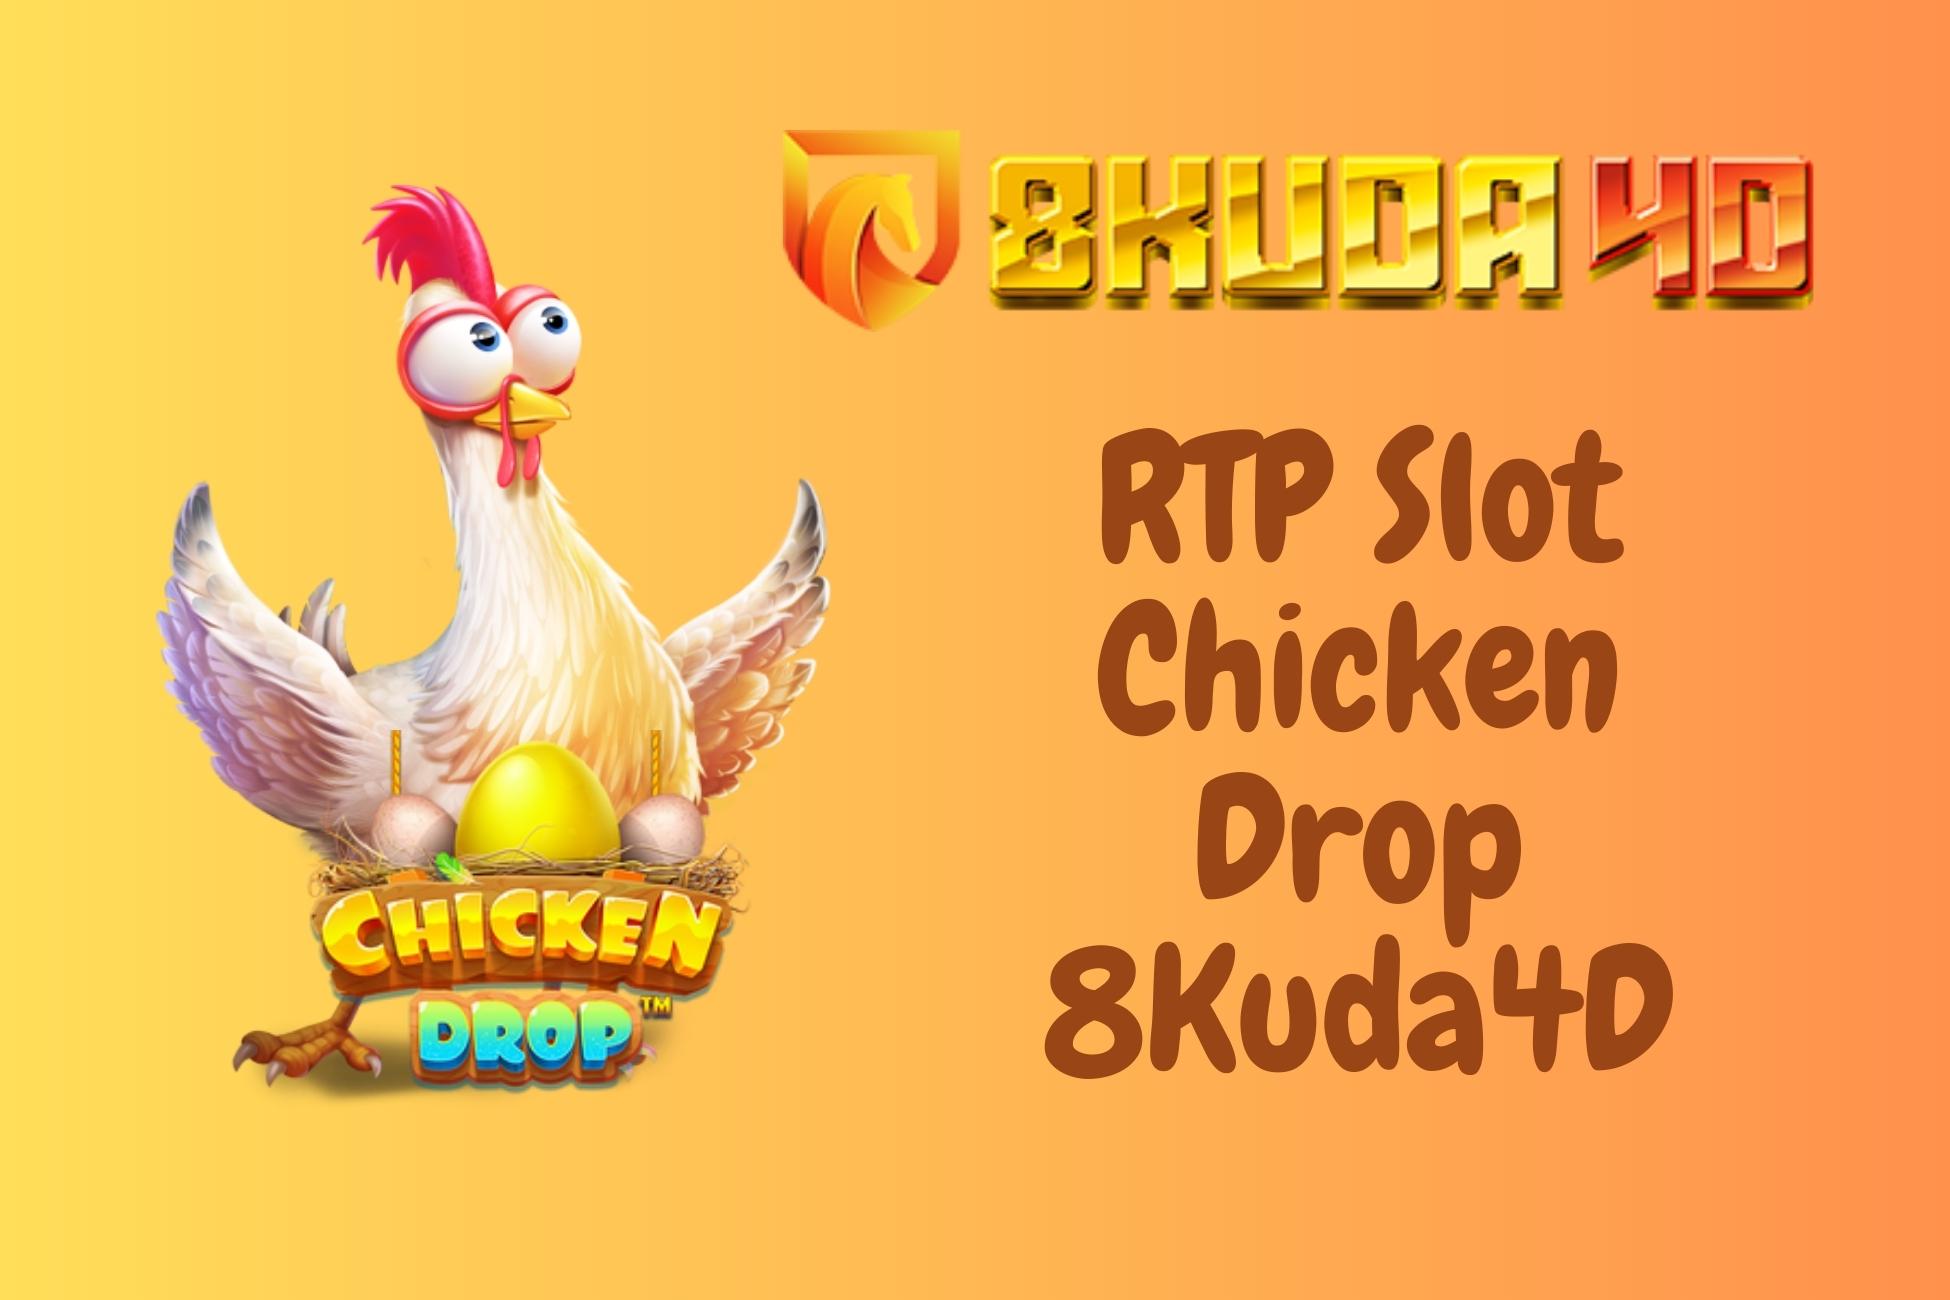 RTP Slot Chicken Drop 8Kuda4D